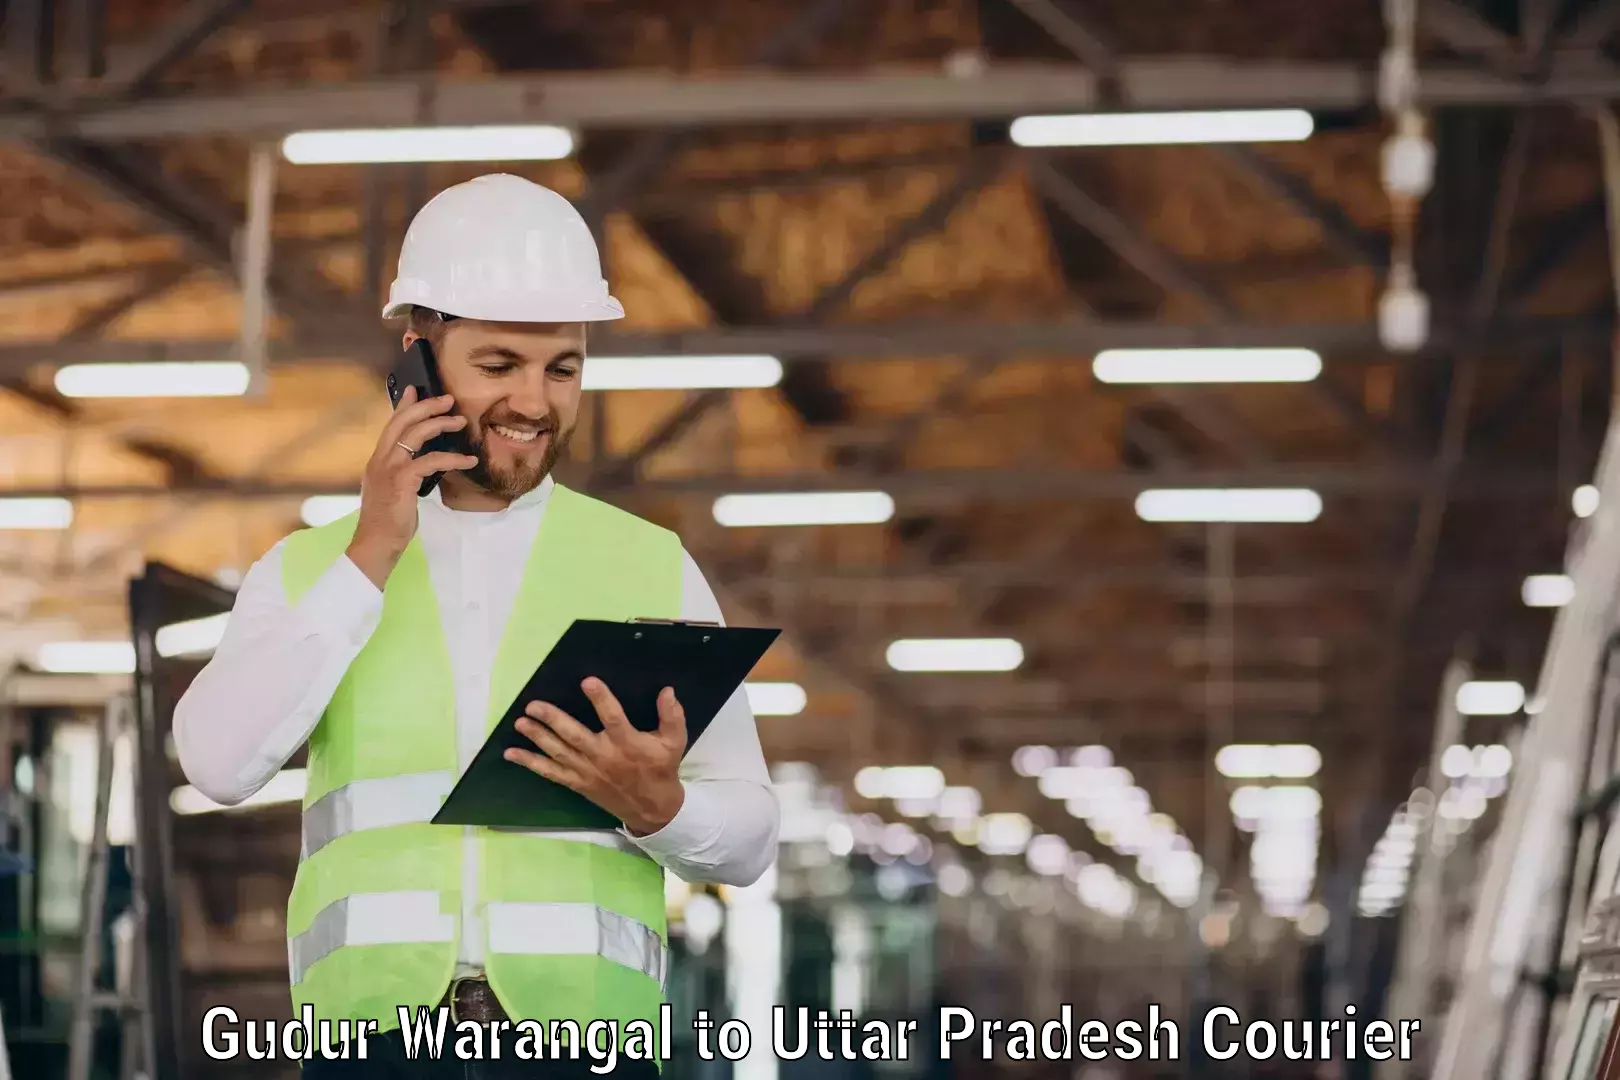 Global courier networks Gudur Warangal to Uttar Pradesh